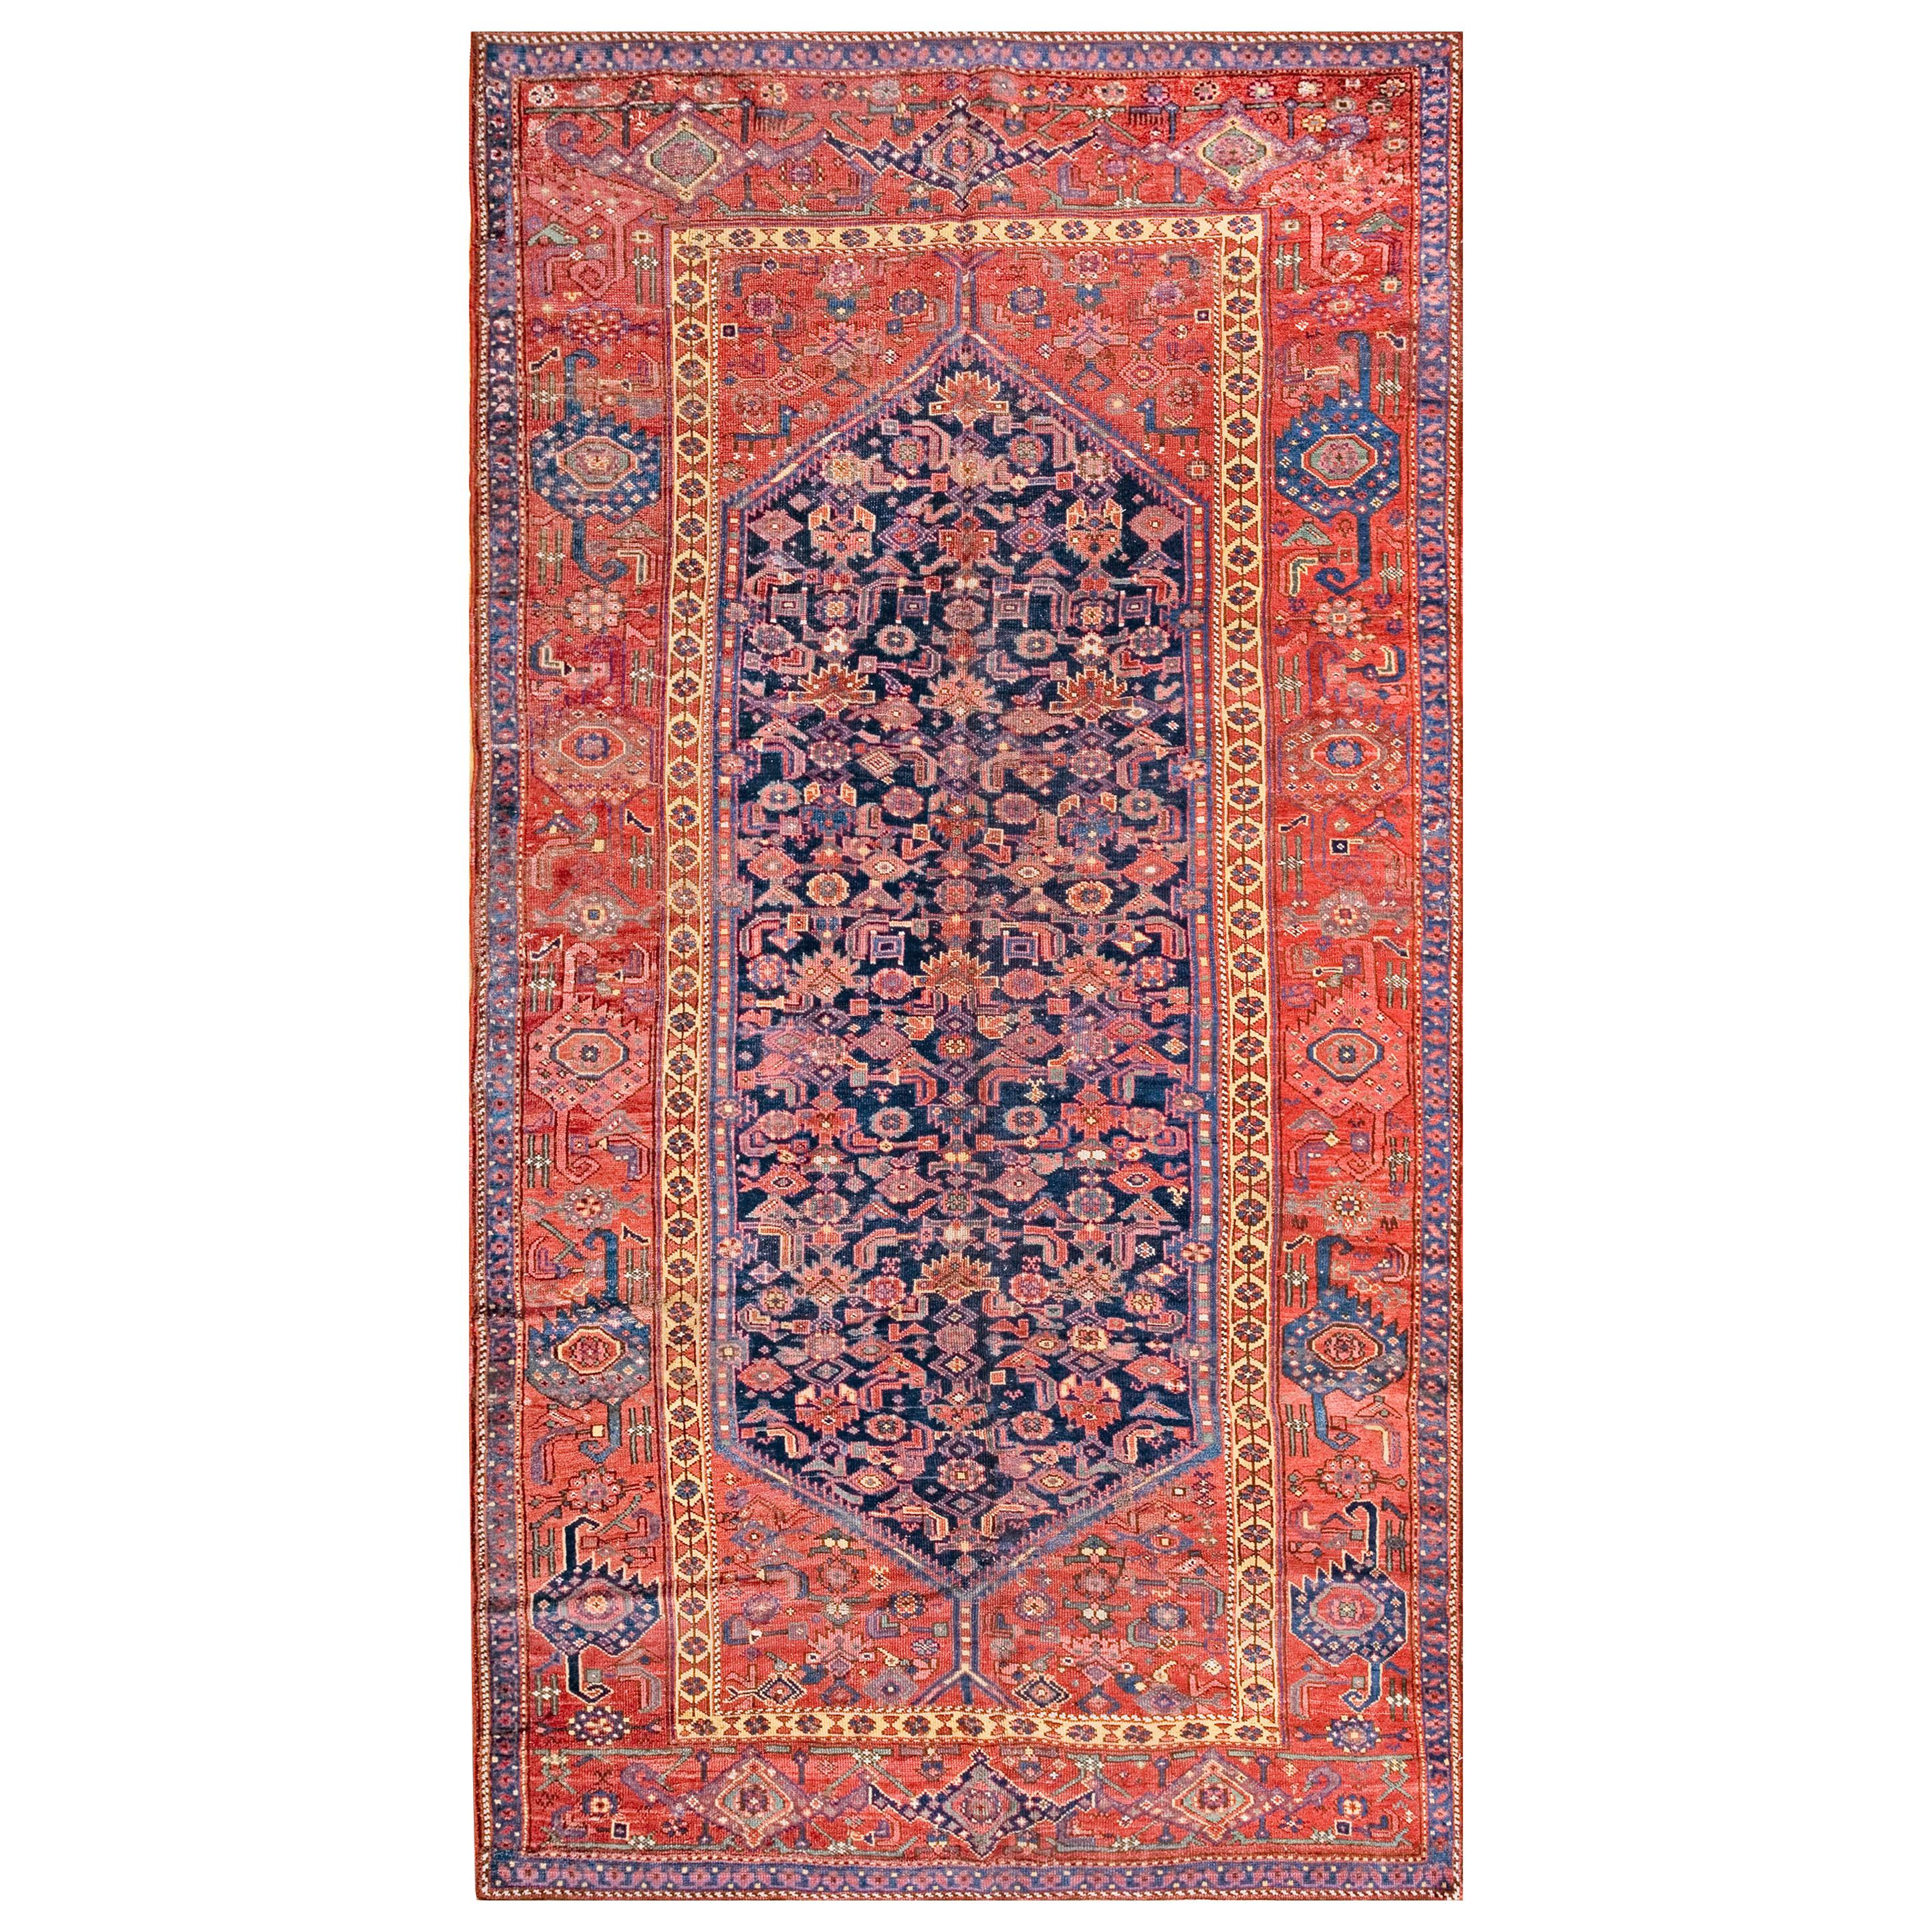 19th Century W. Persian Kurdish Carpet ( 5'9" x 10'6" - 175 x 320 )